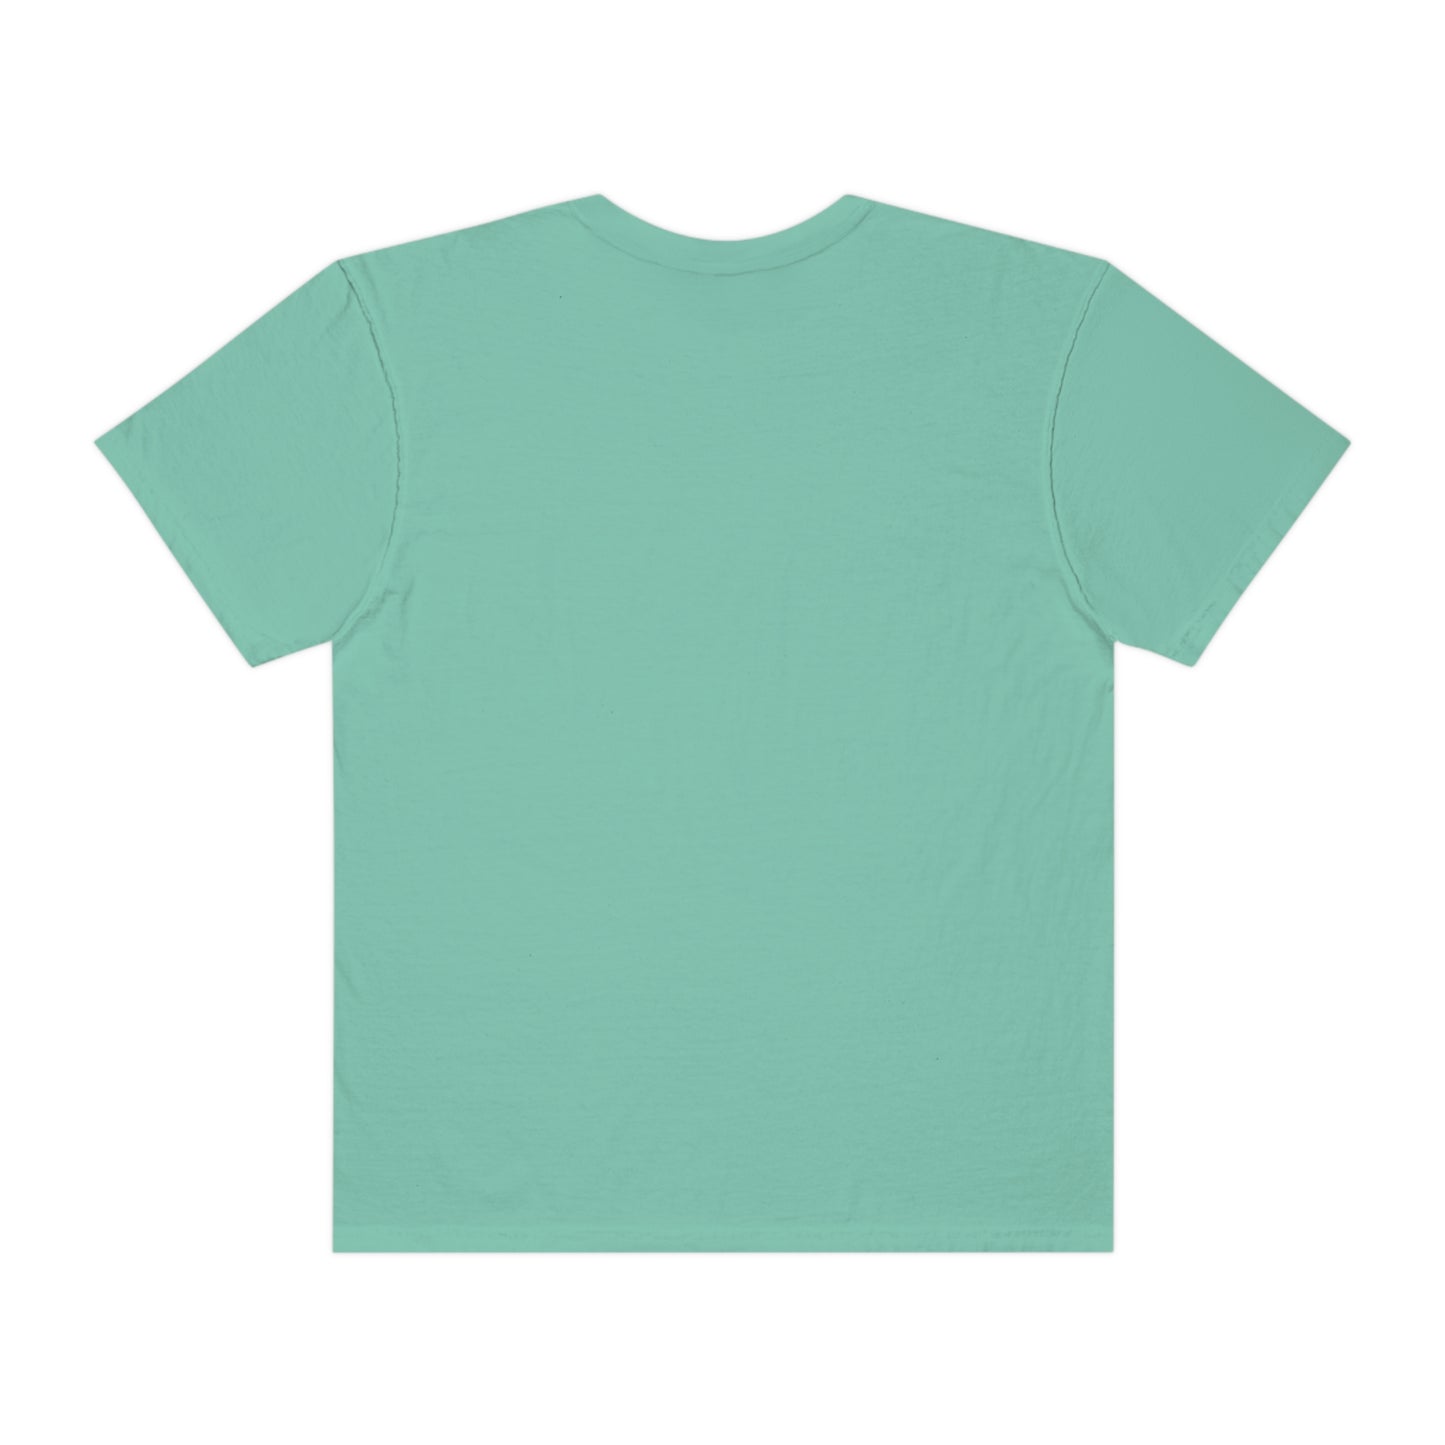 Plant Addict Garment-Dyed T-shirt